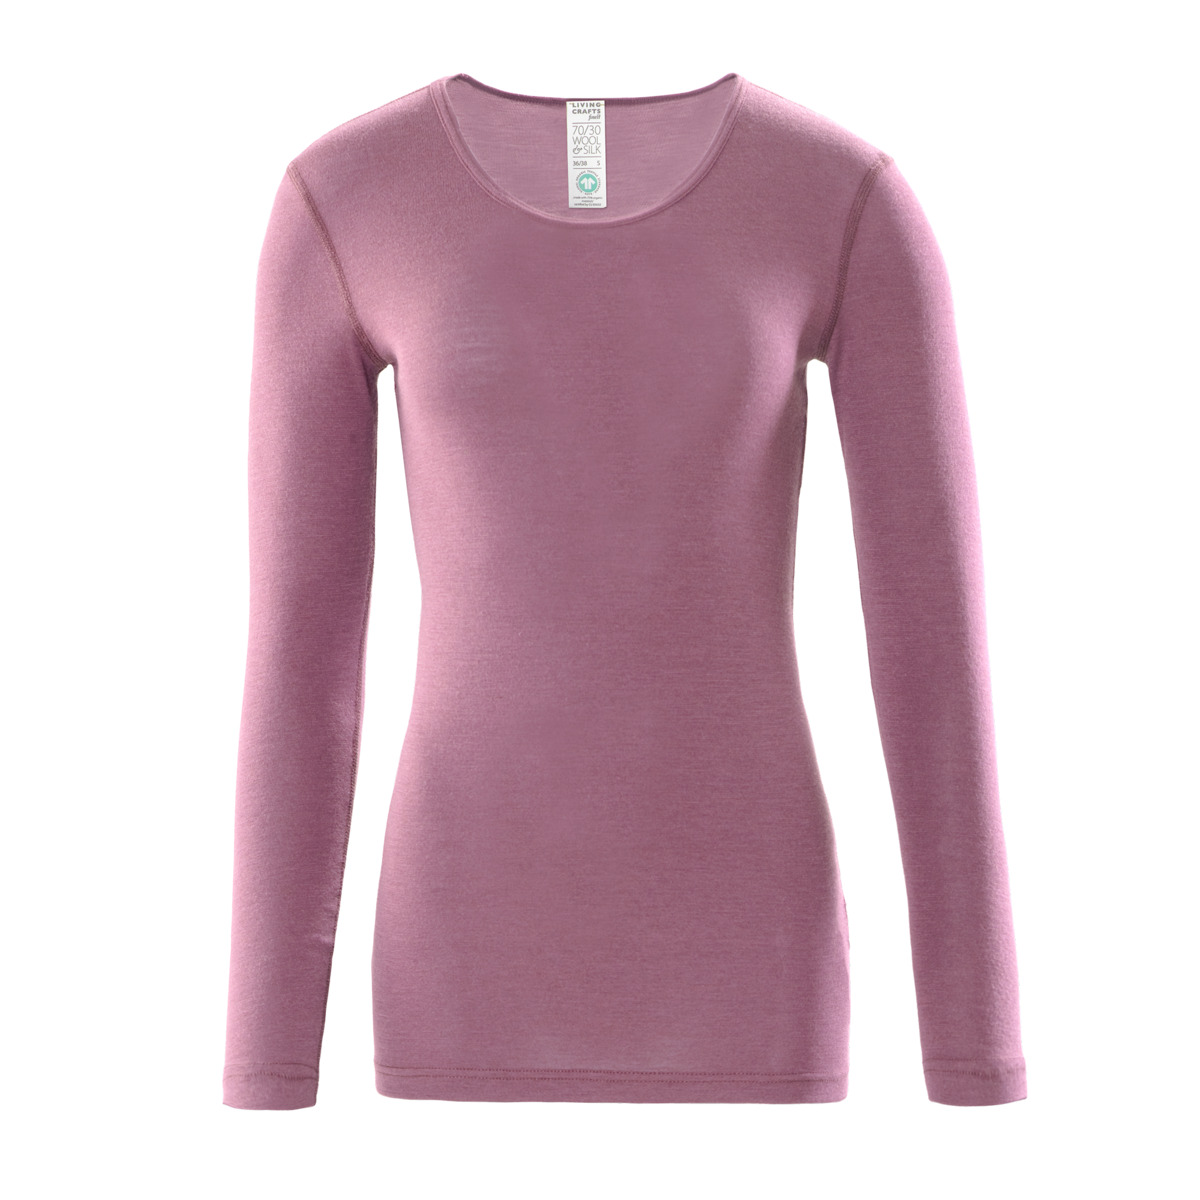 Pink Long-sleeved shirt, FELICIA